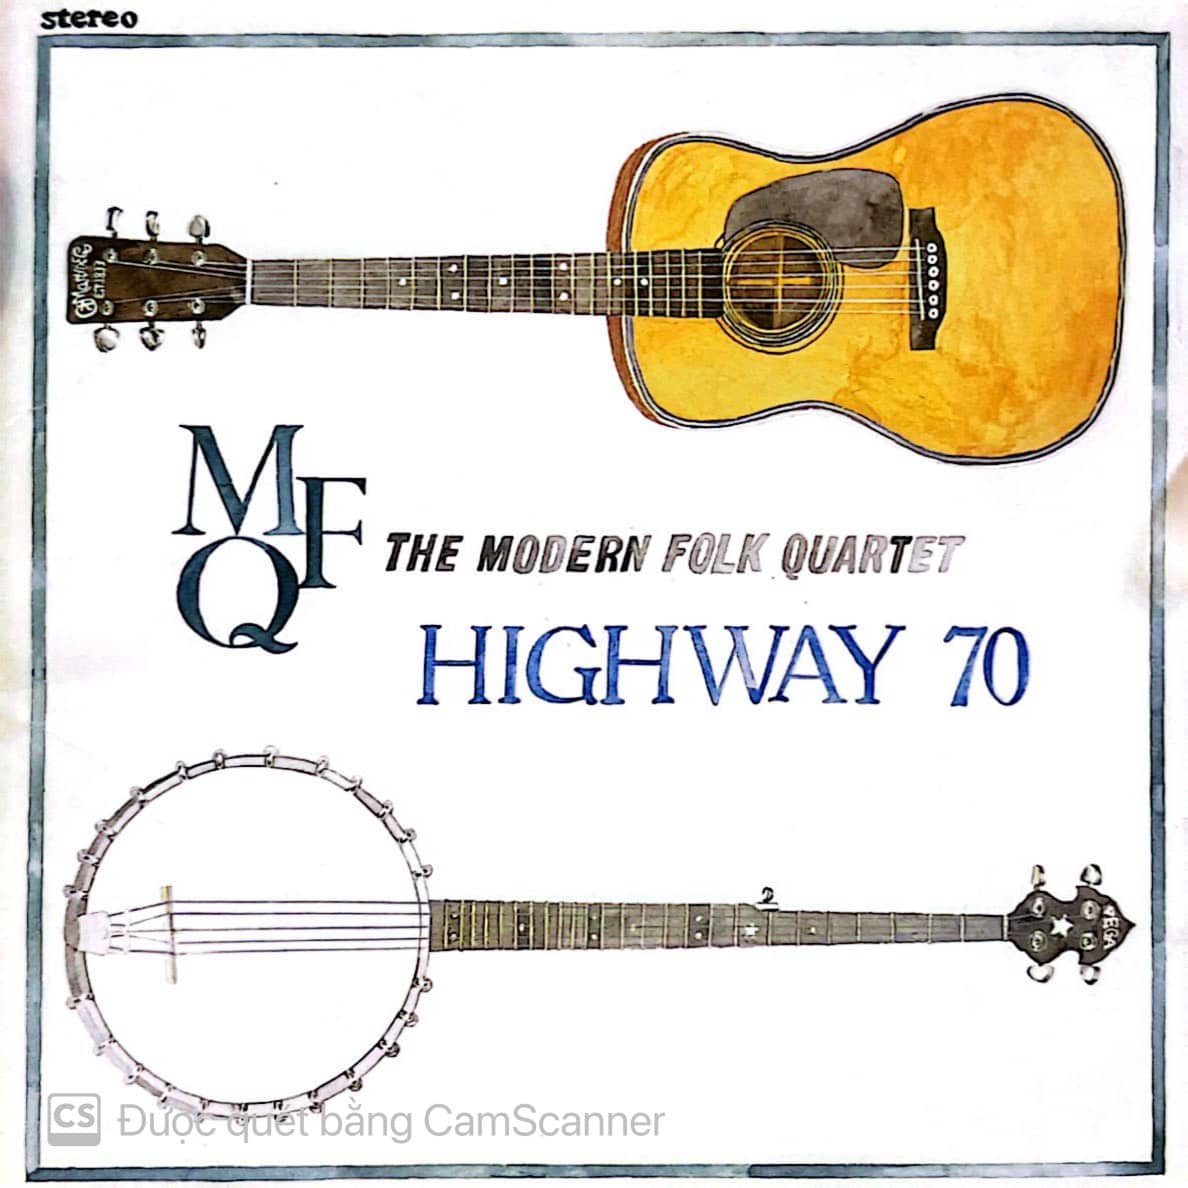 MFQ – Highway 70